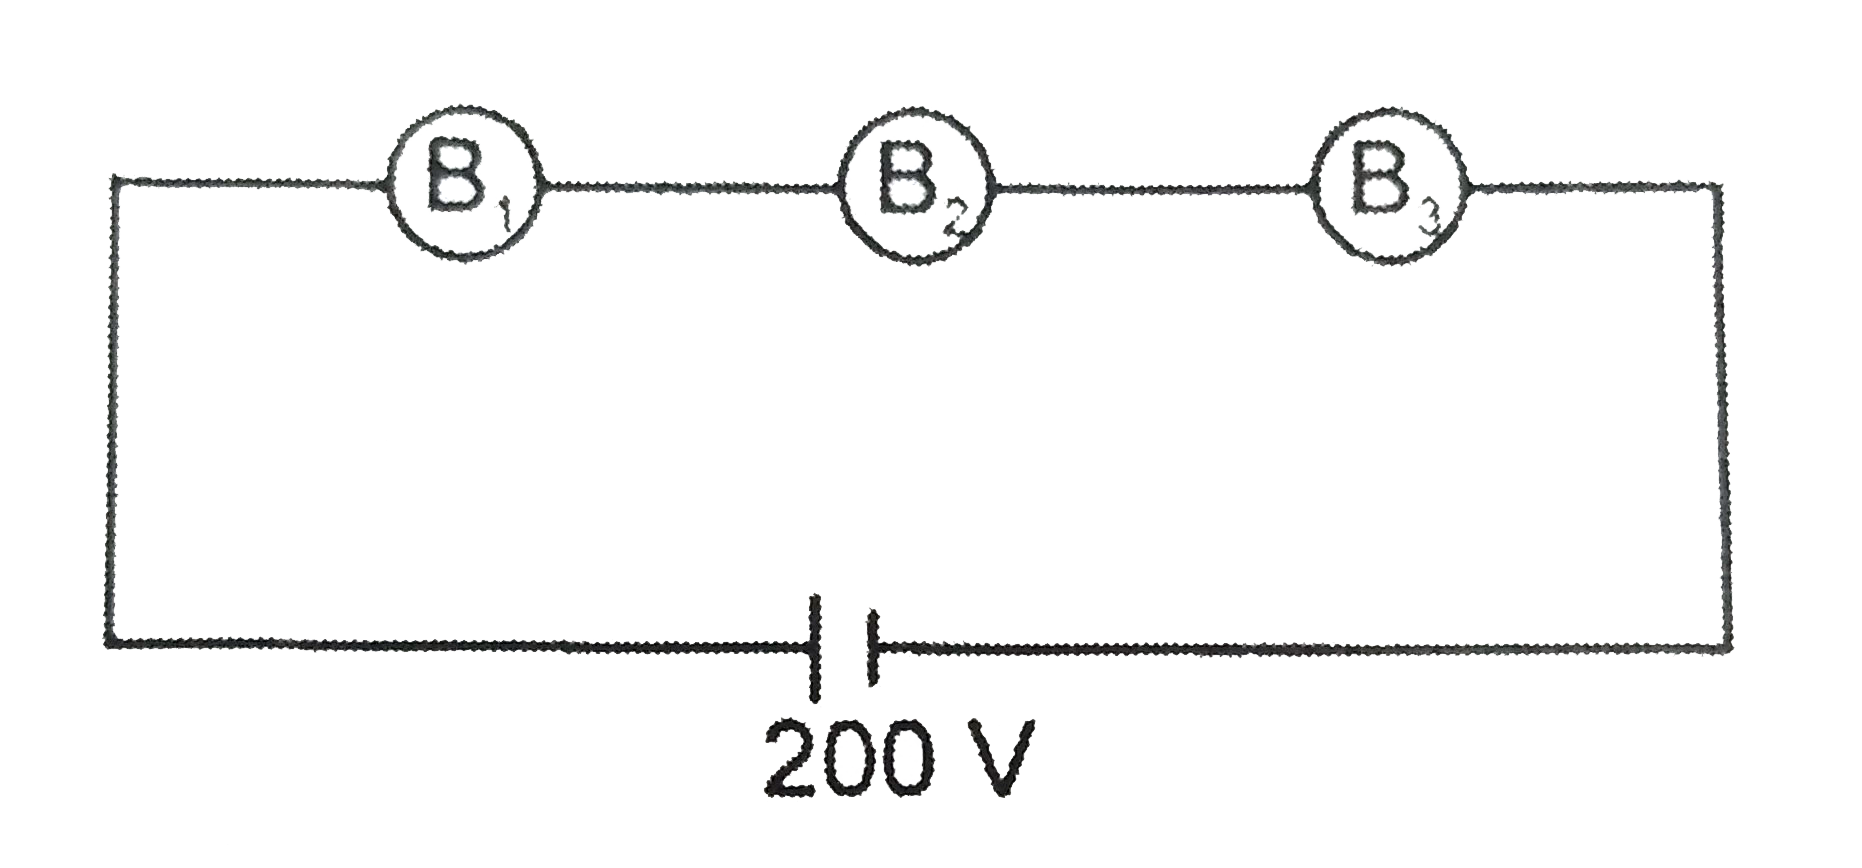 In the figure shown B(1),B(2)